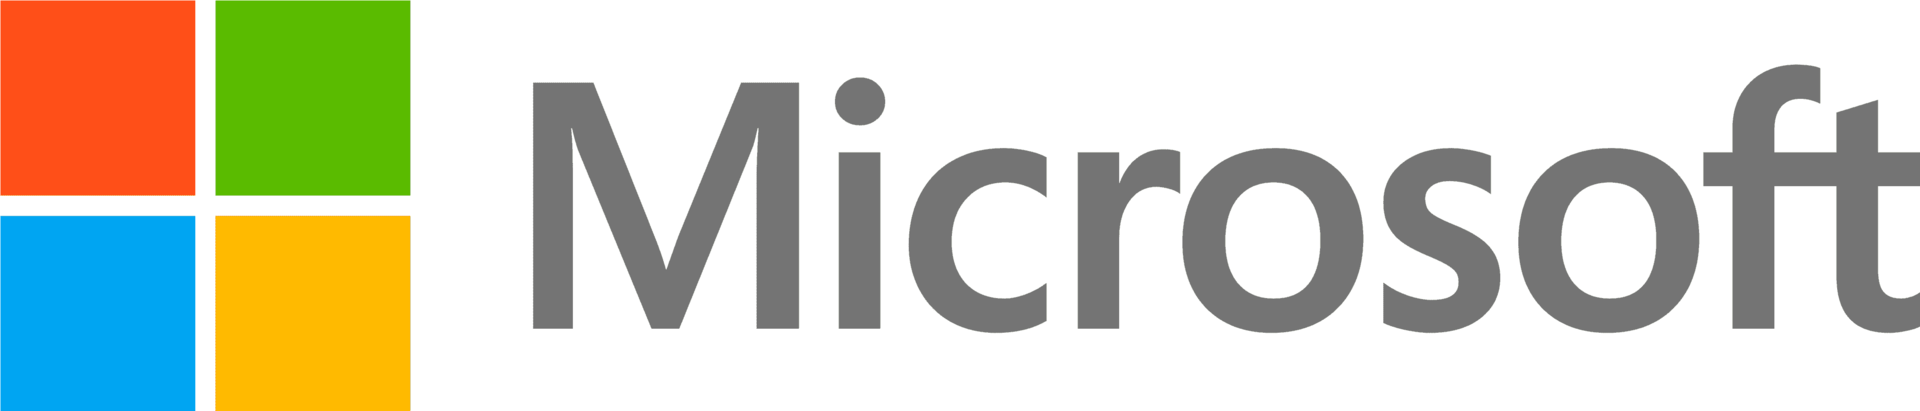 Microsoft DG7GMGF0G49W.0002 Software-Lizenz/-Upgrade 1 Lizenz(en) (DG7GMGF0G49W.0002)